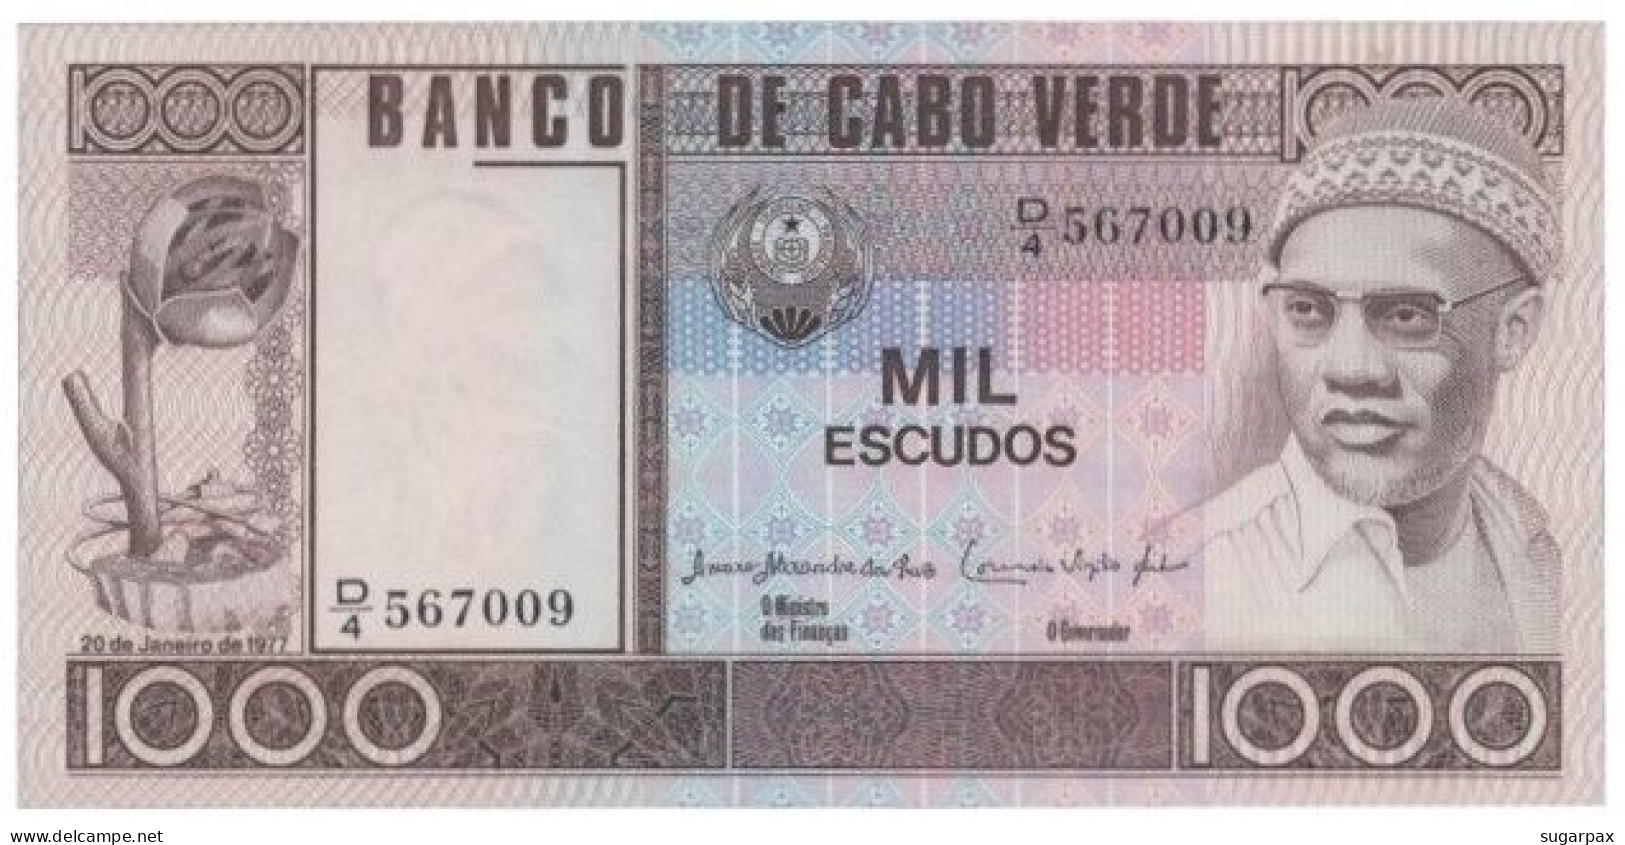 CAPE VERDE - 1000 ESCUDOS - 20.01.1977 - Pick 56.a - Unc. - Amilcar Cabral - 1 000 - Cap Vert